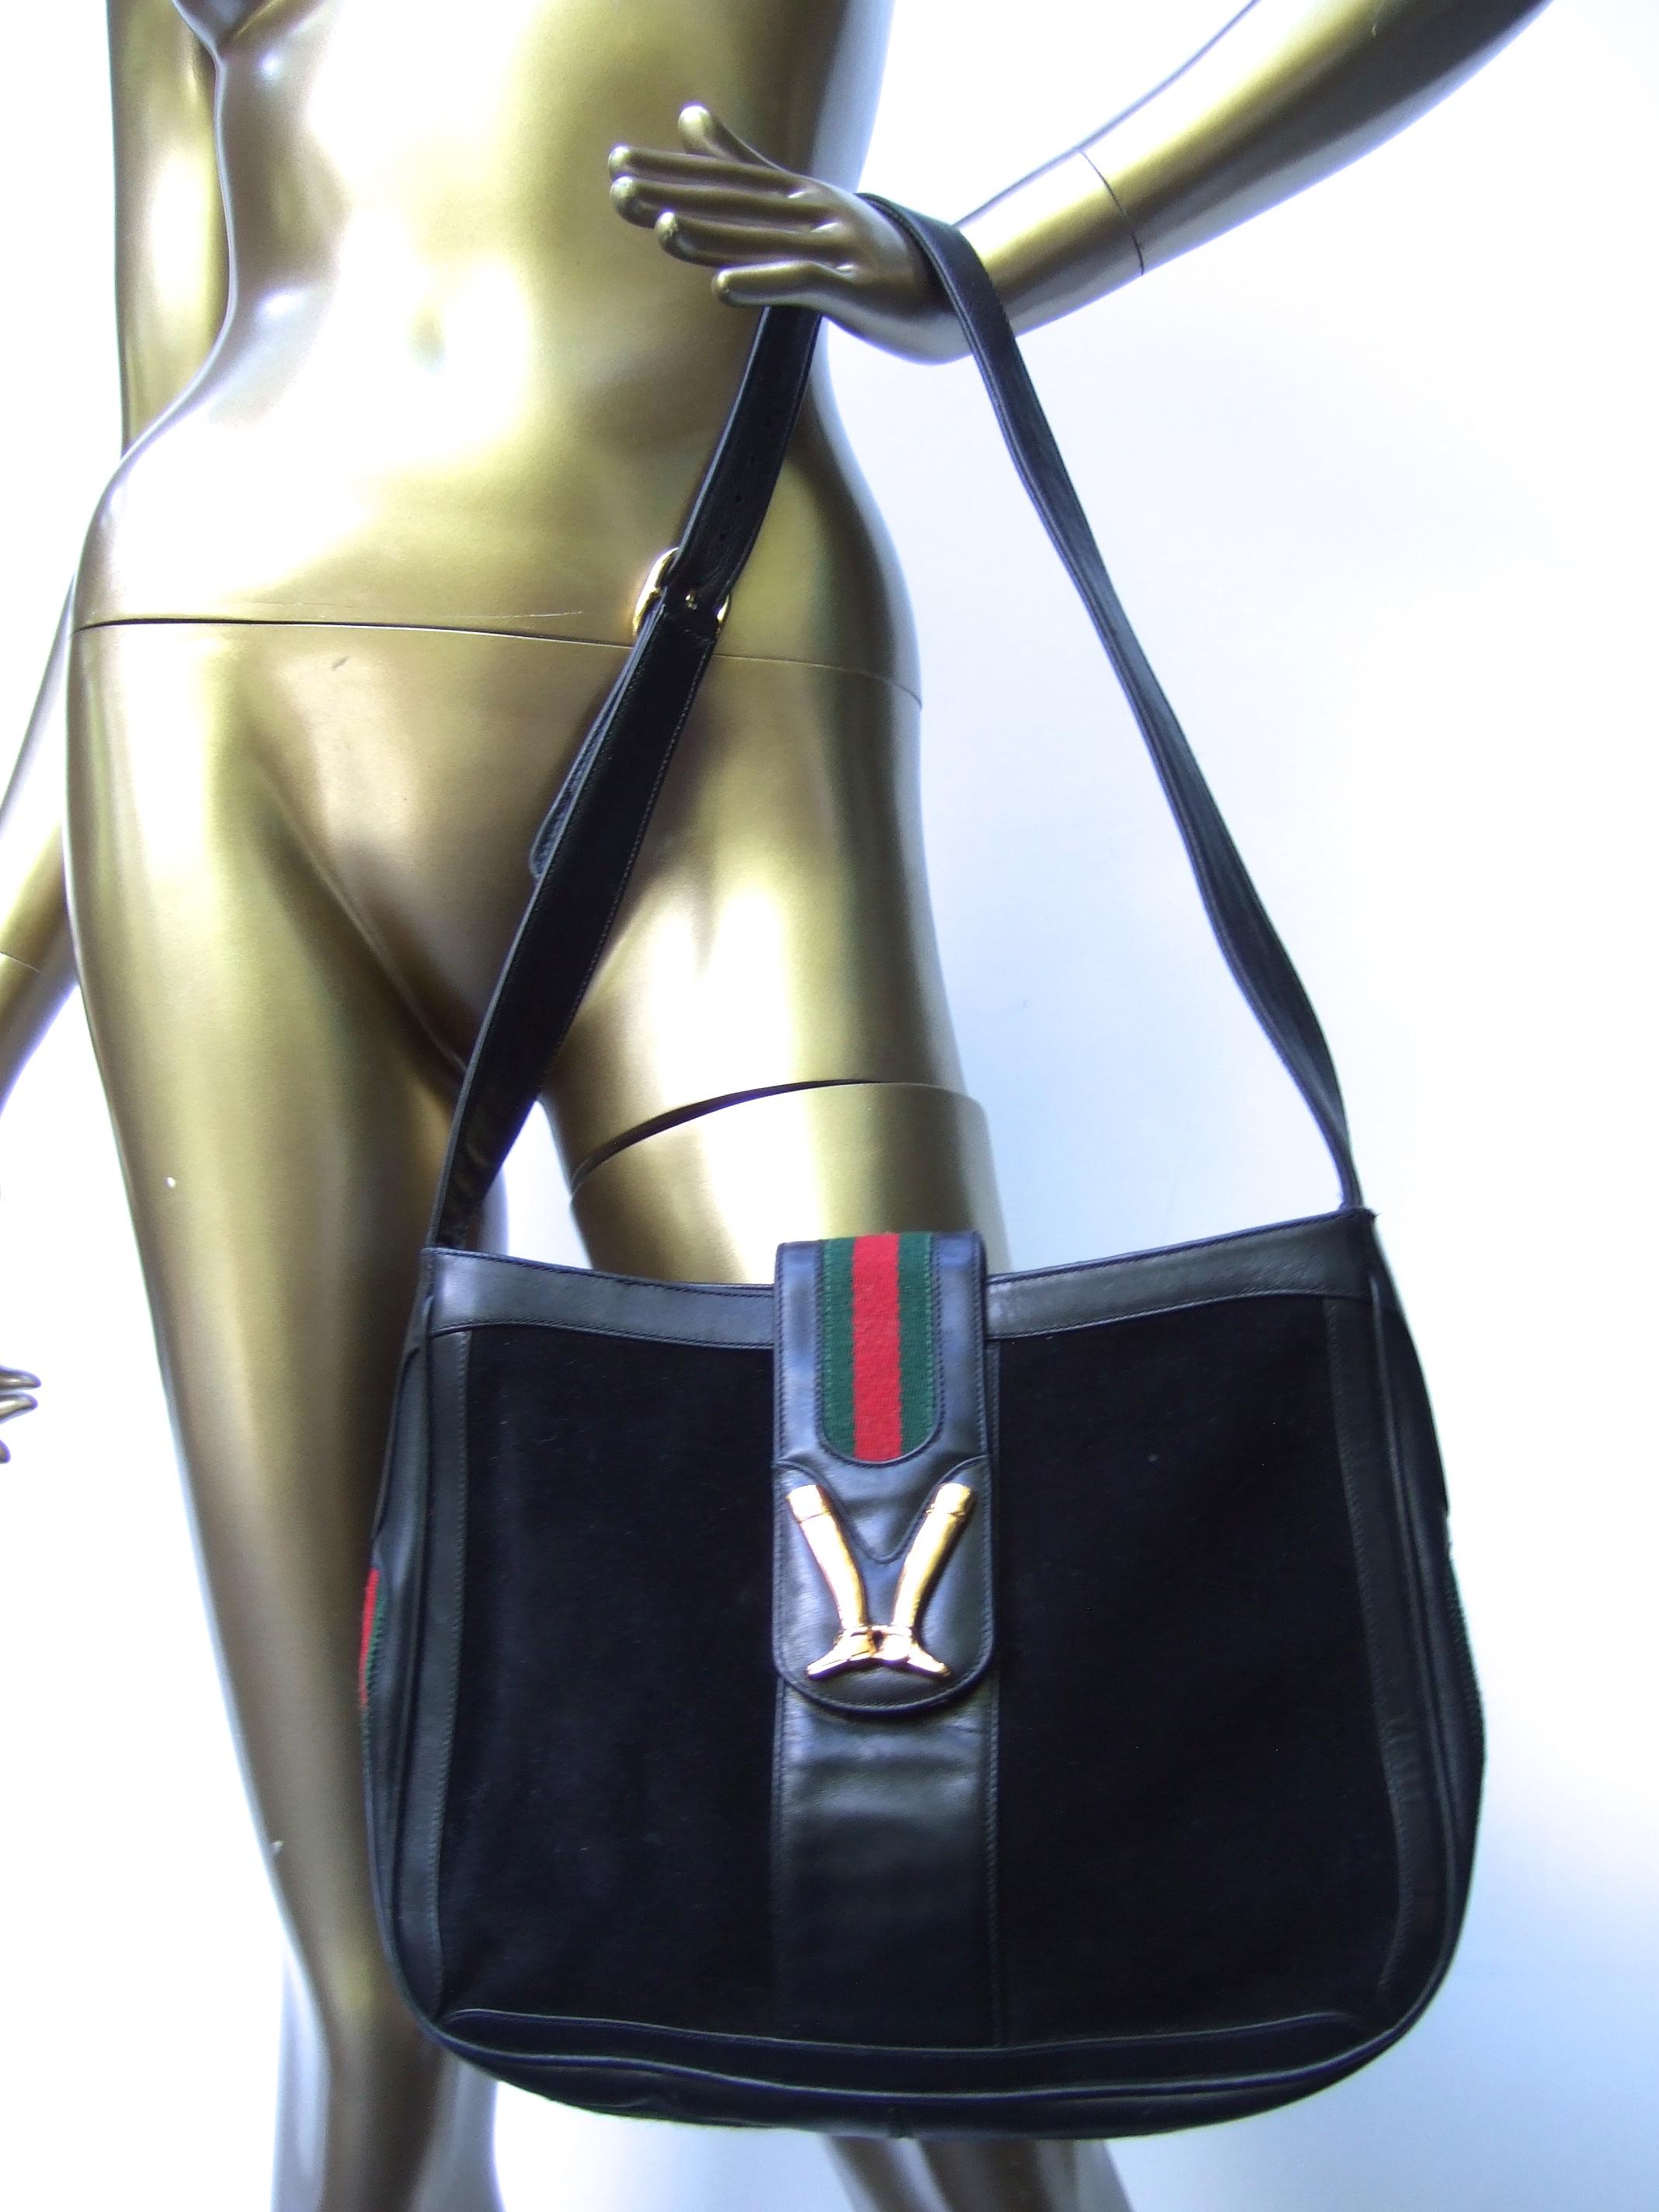 Gucci Italy Rare Black Suede Boot Emblem Shoulder Bag c 1970s For Sale 10